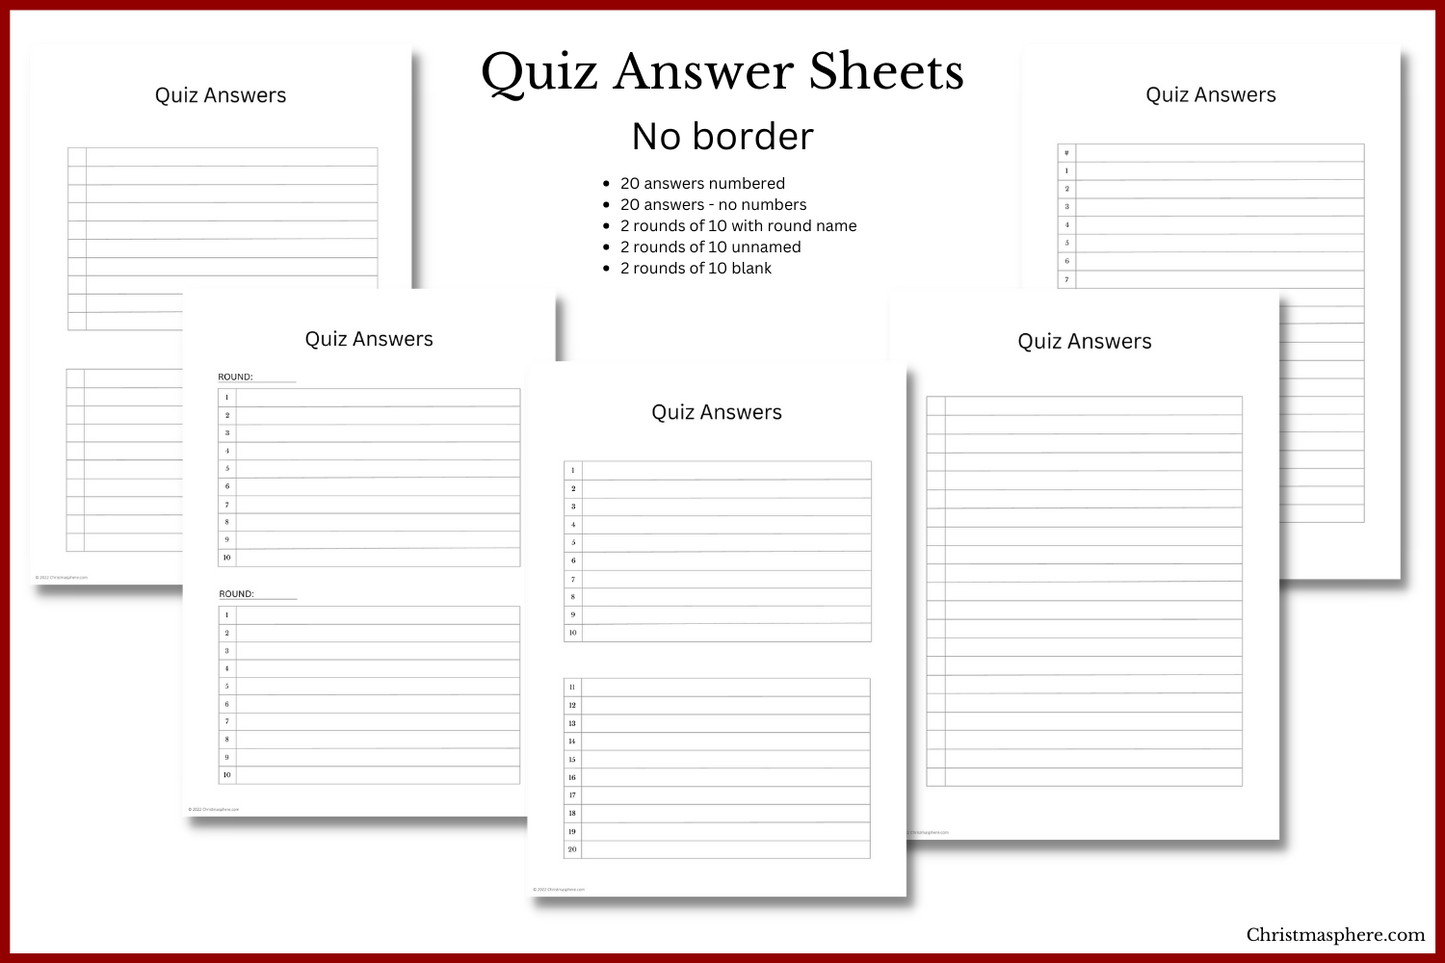 Quiz Answer Sheet Bundle | 5 Designs